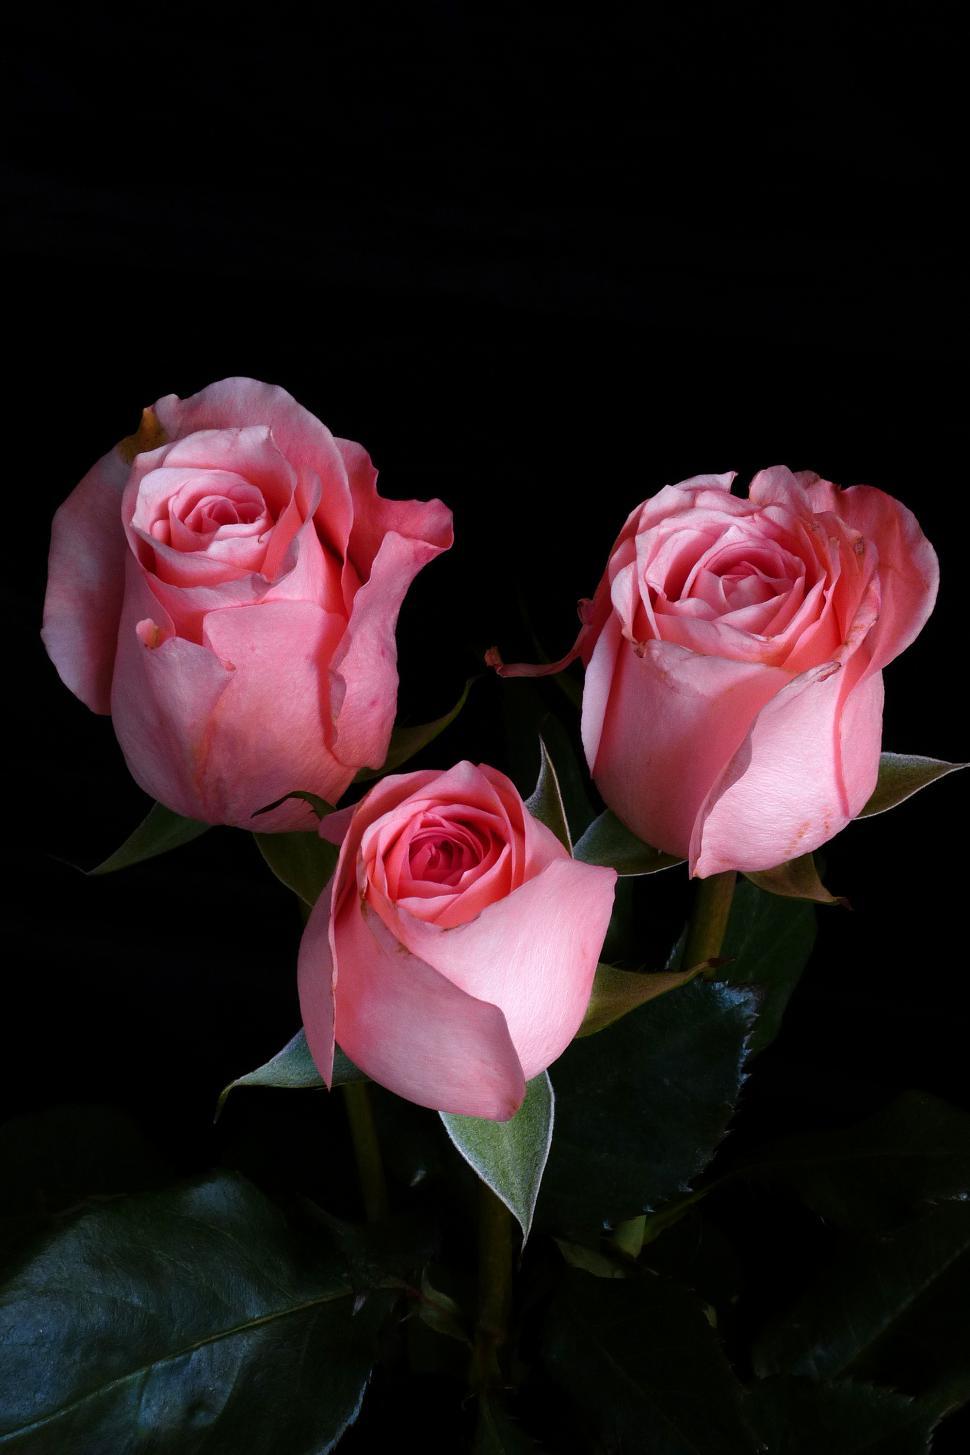 Free Image of Three Pink Roses 